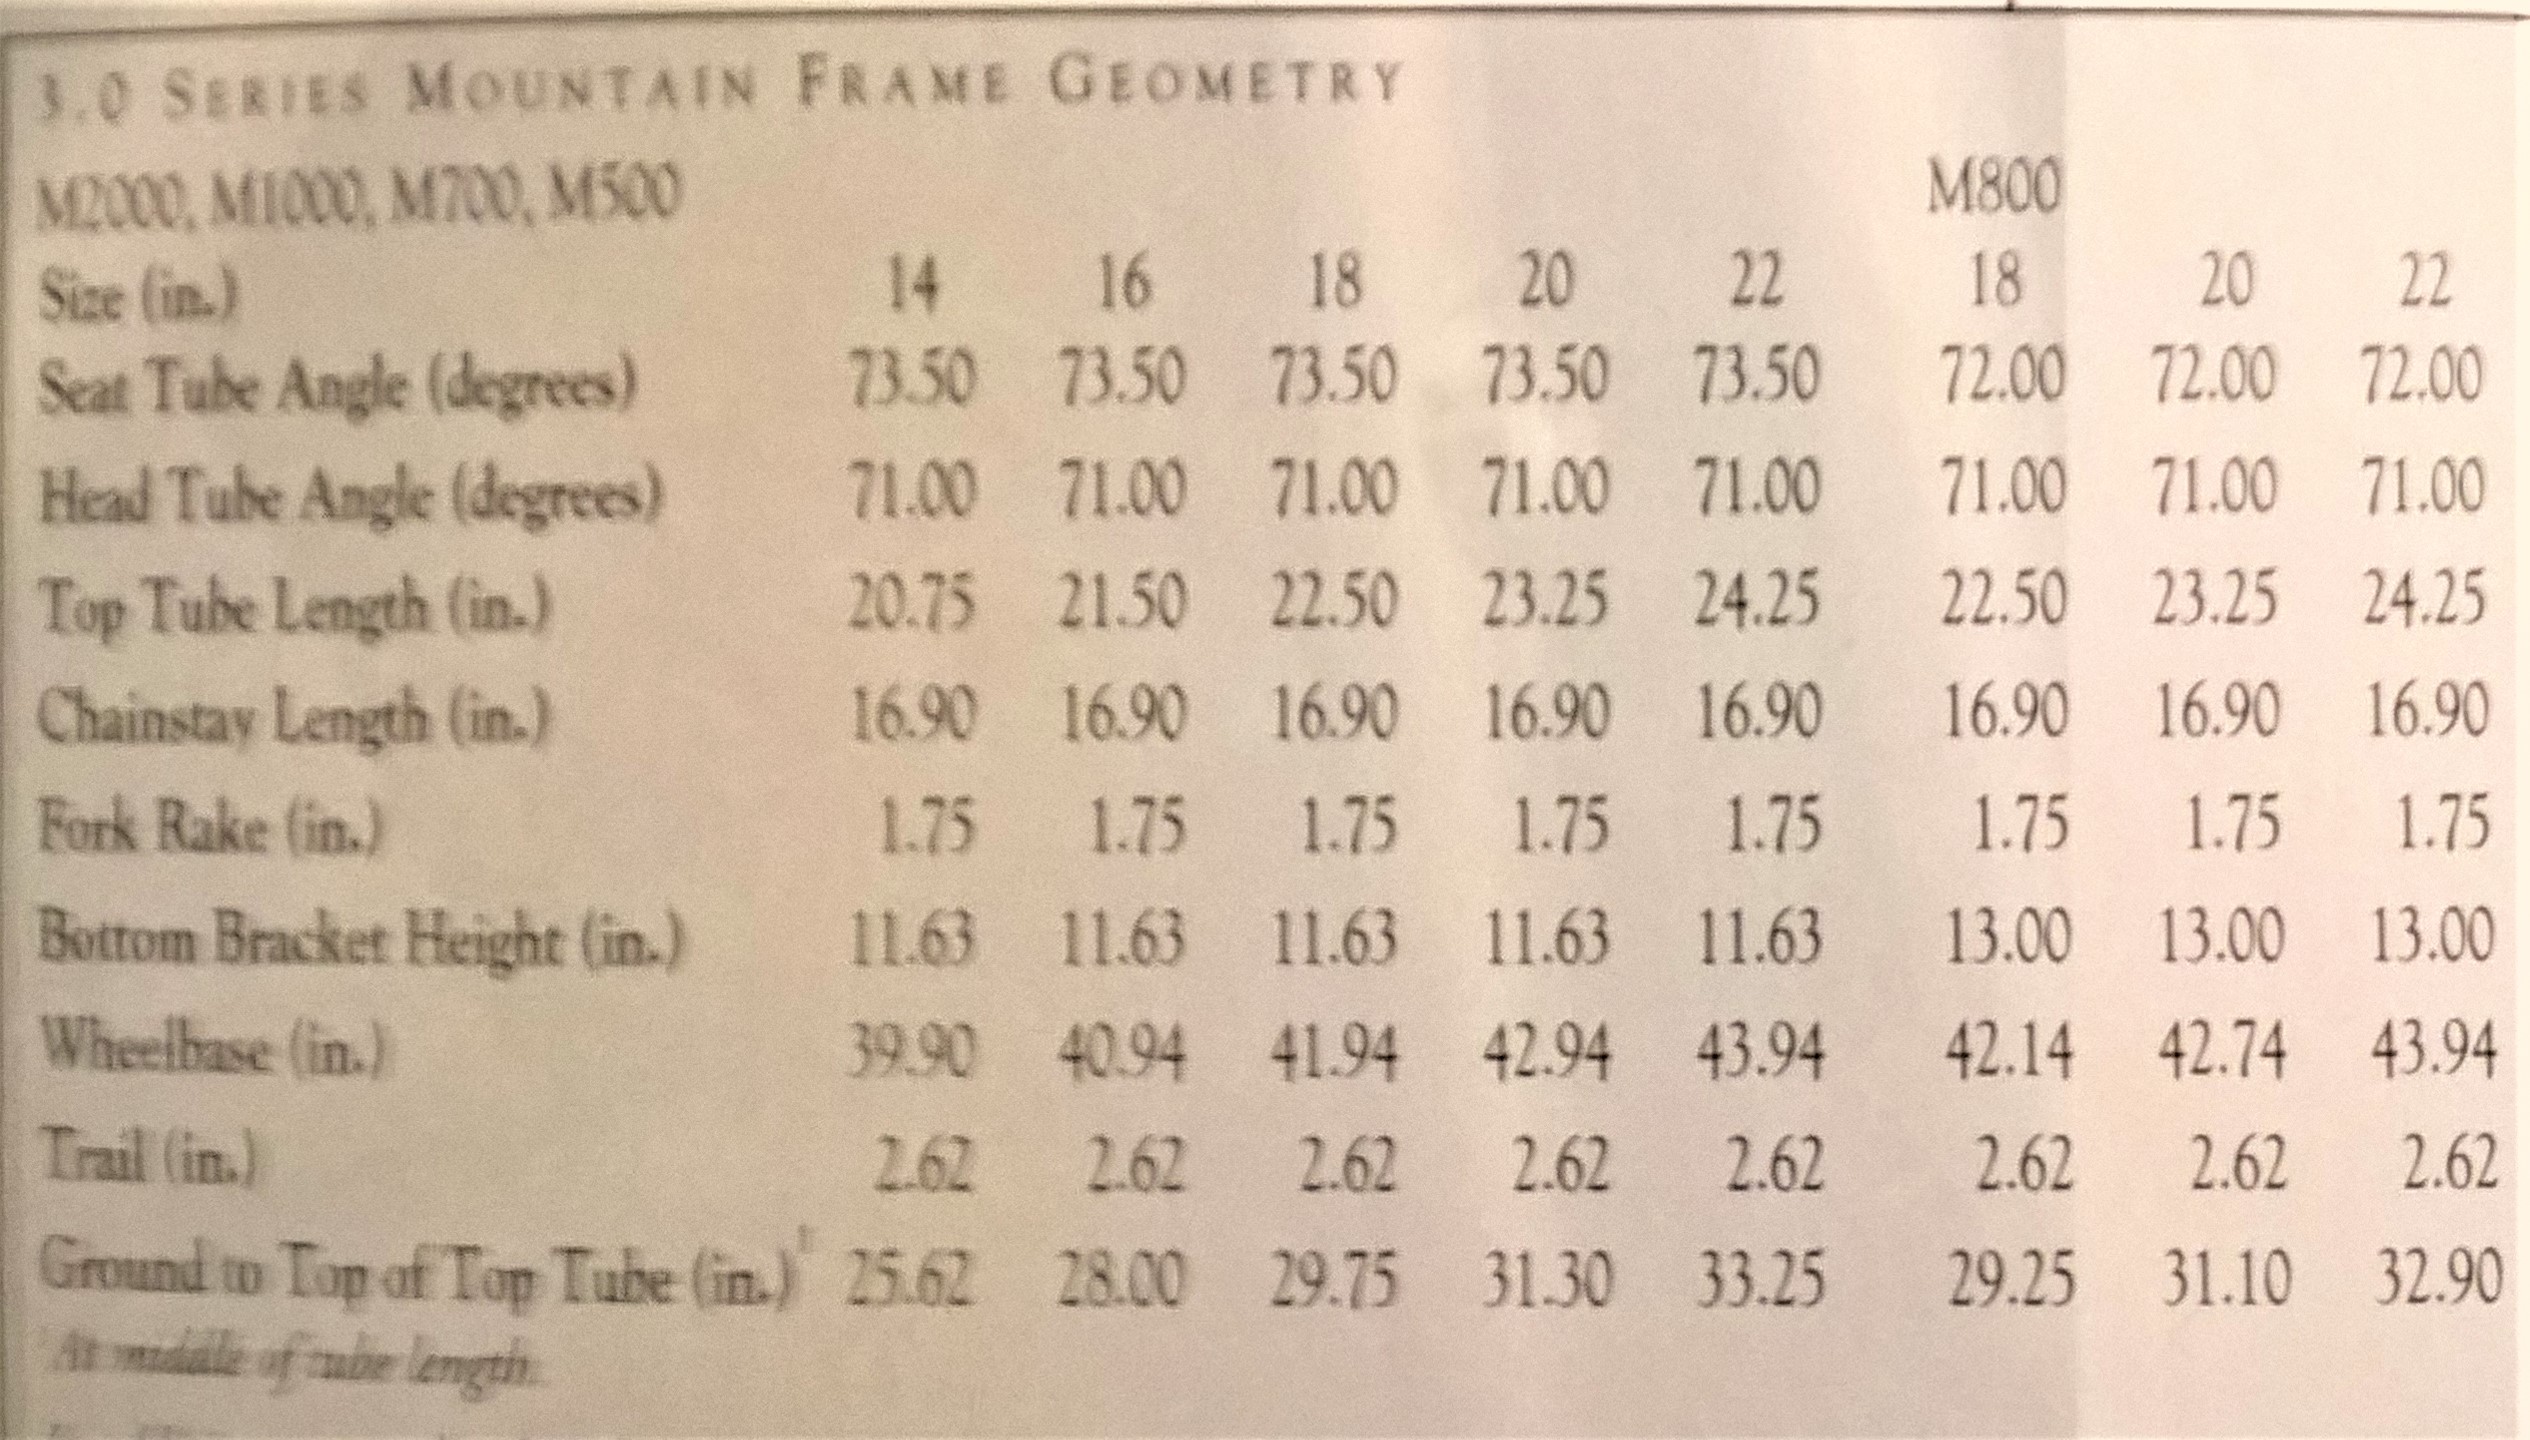 1993 MTB frame geometry.jpg